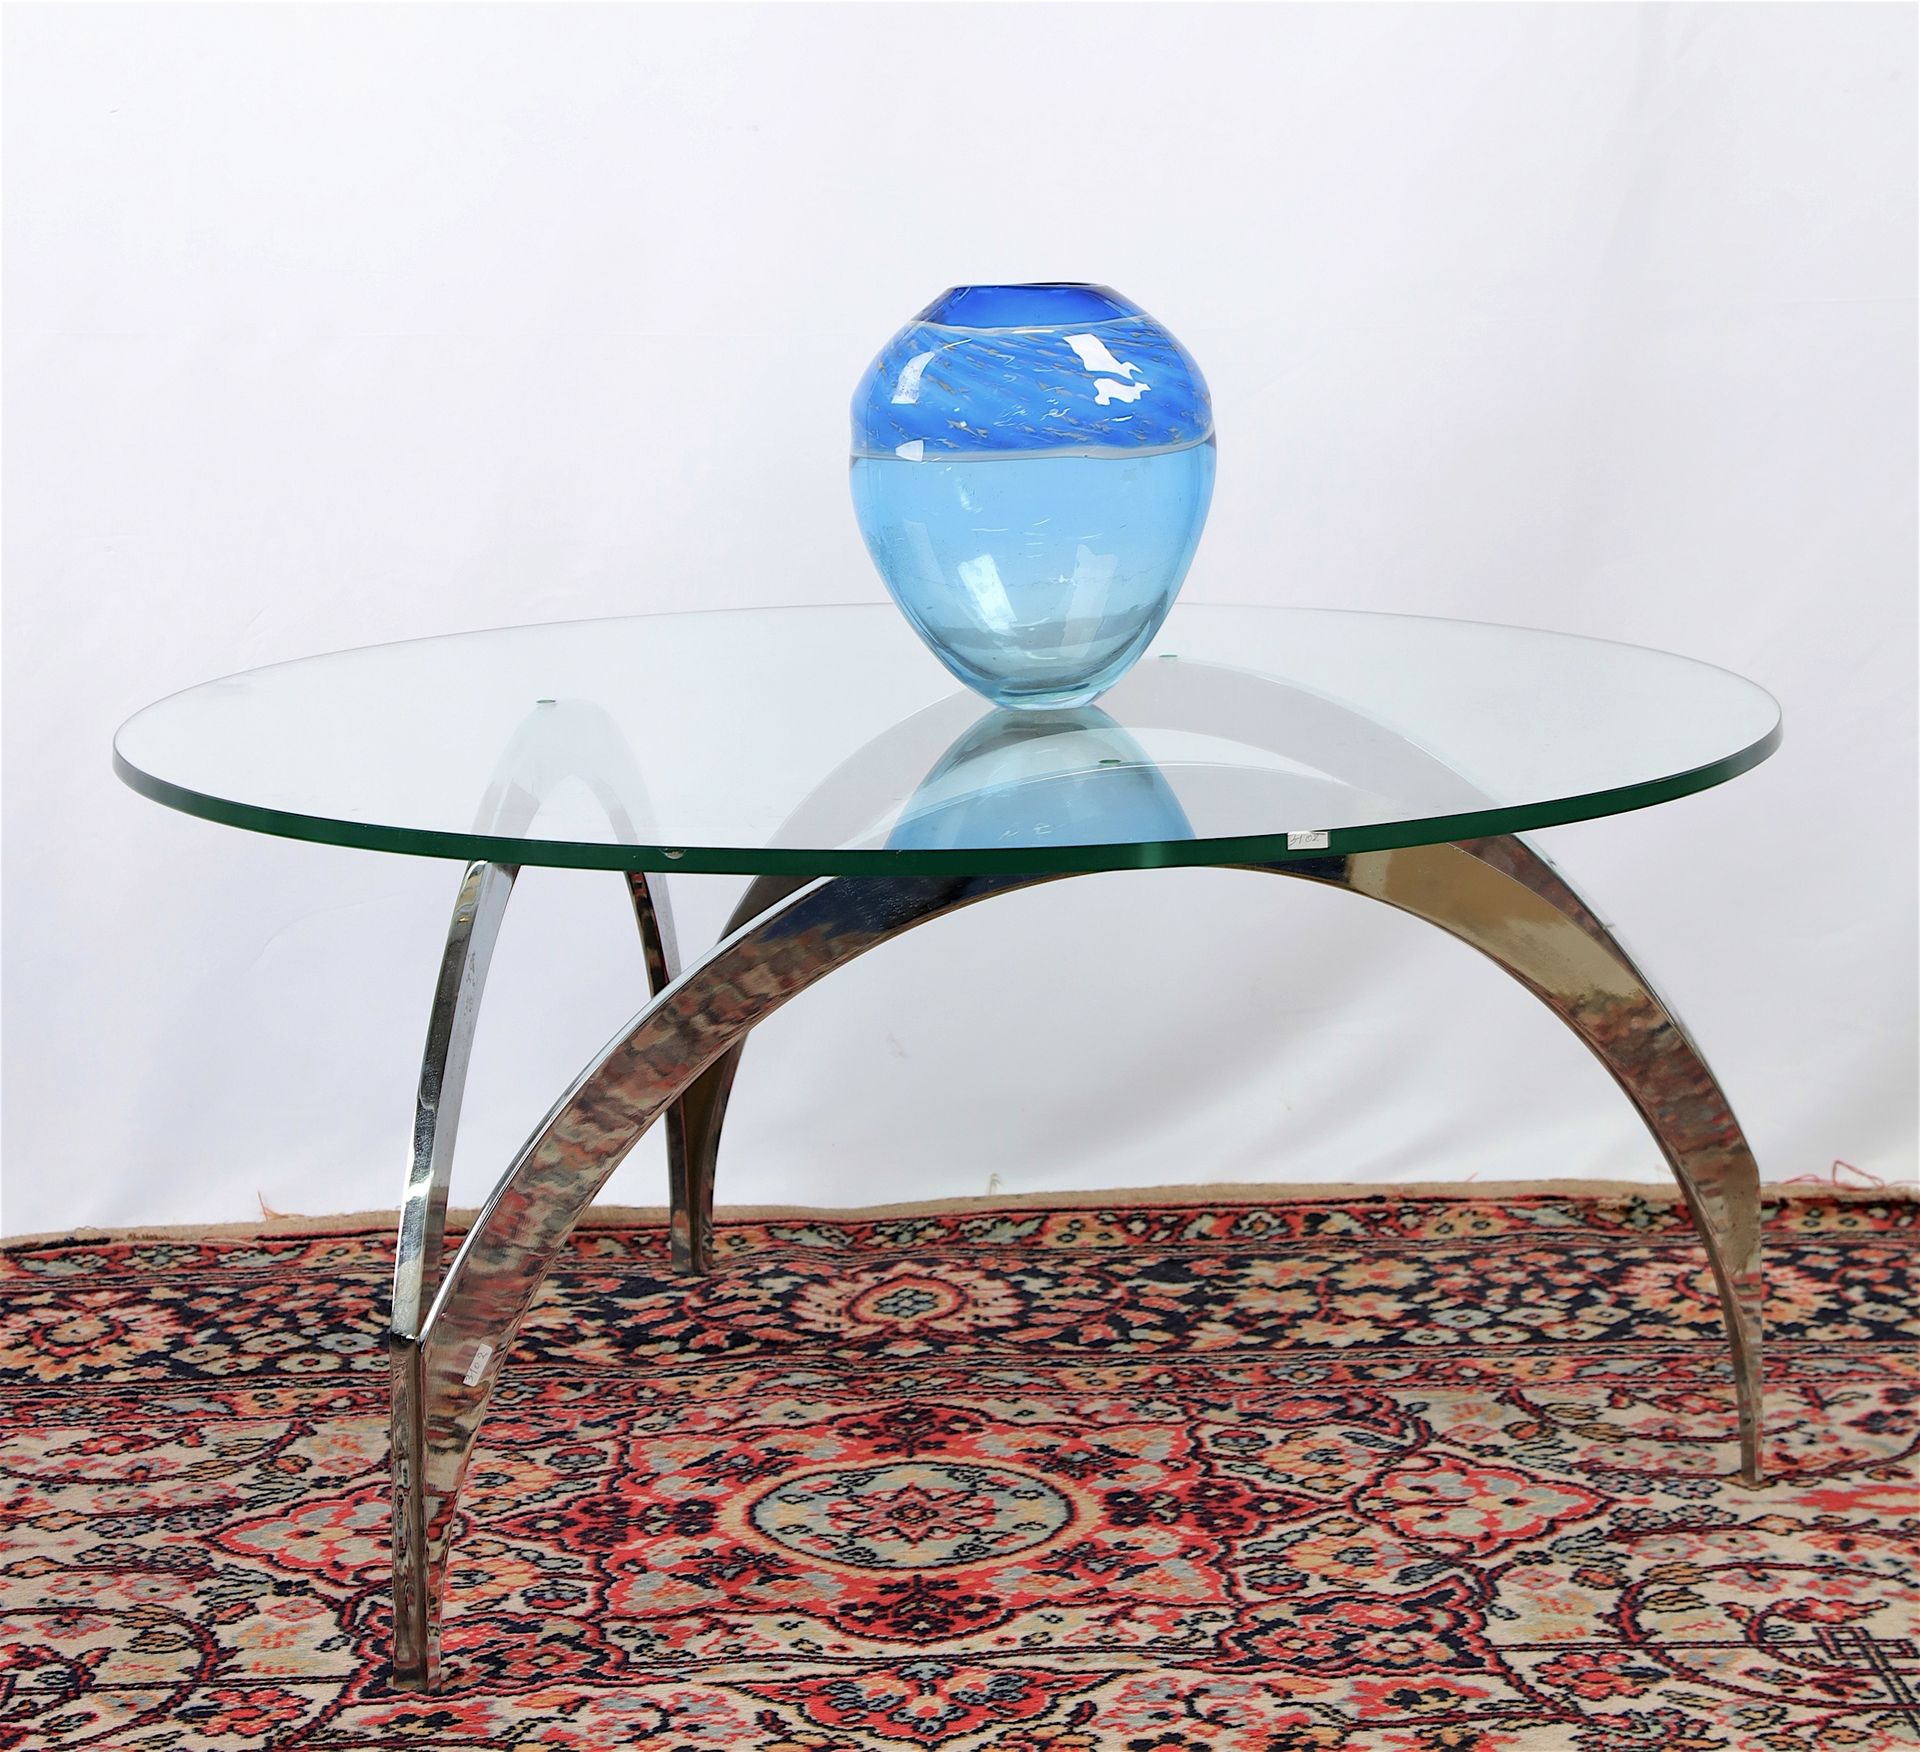 Null Boris TABACOFF (归功于)

咖啡桌，拉丝钢底座，圆形玻璃桌面。